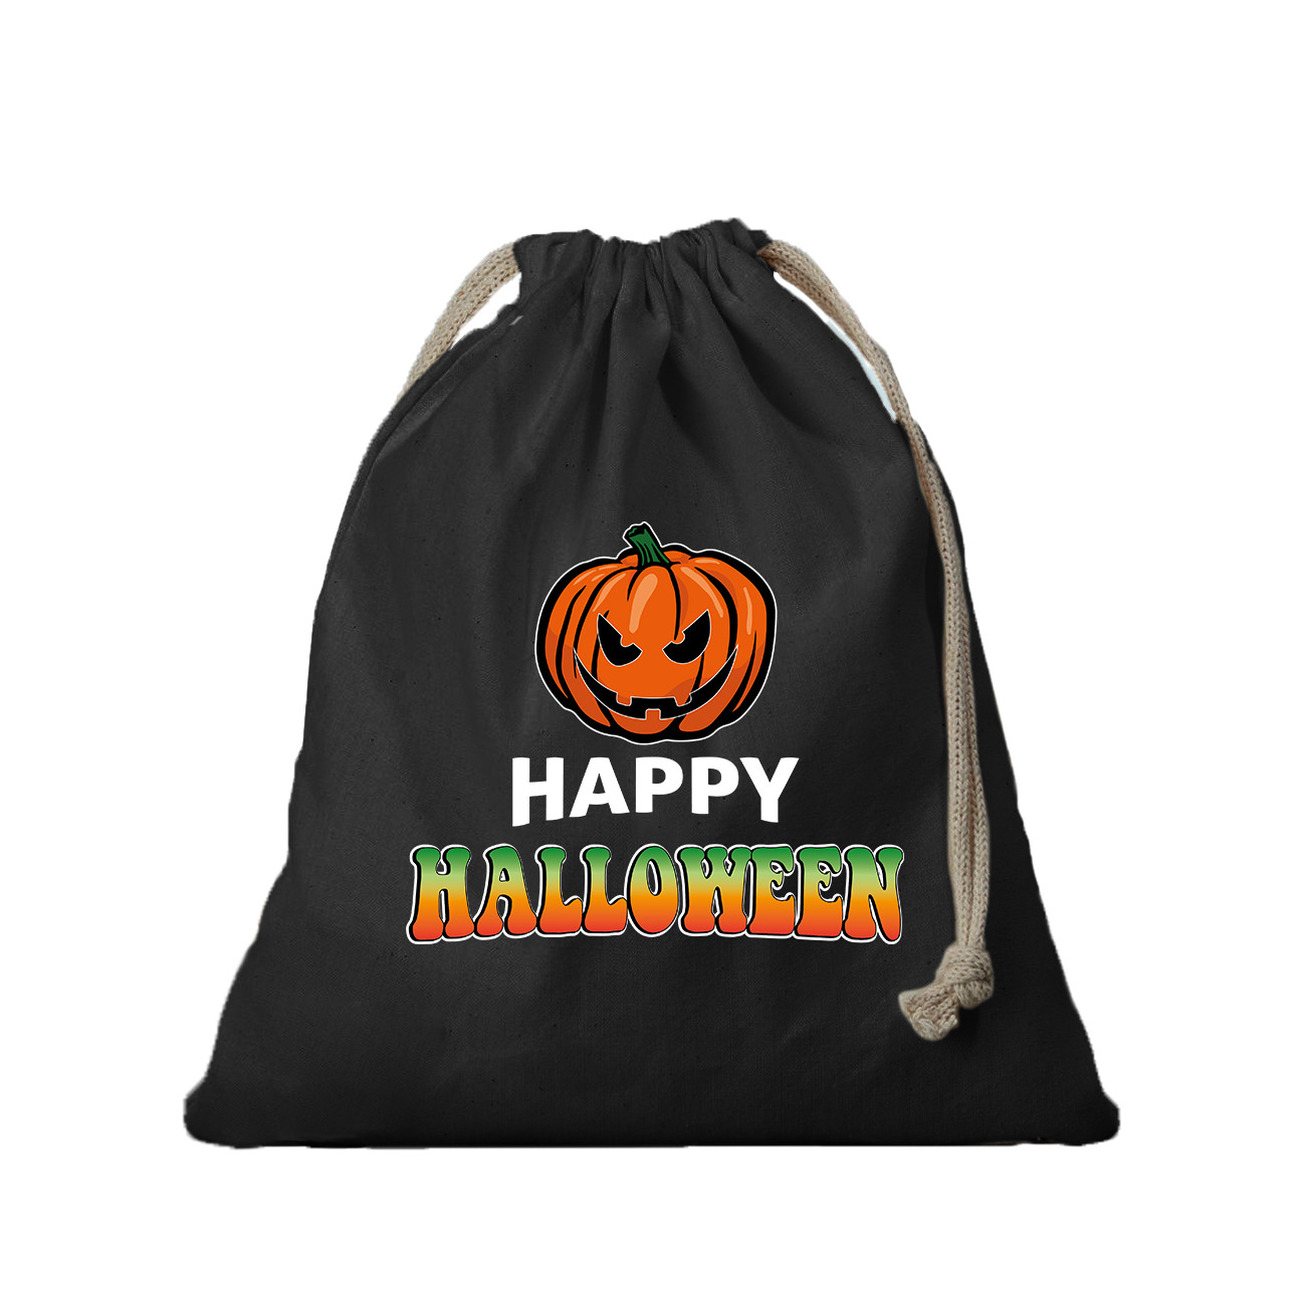 Halloween - 2x Pompoen / happy halloween canvas snoep tasje/ snoepzakje zwart met koord 25 x 30 cm